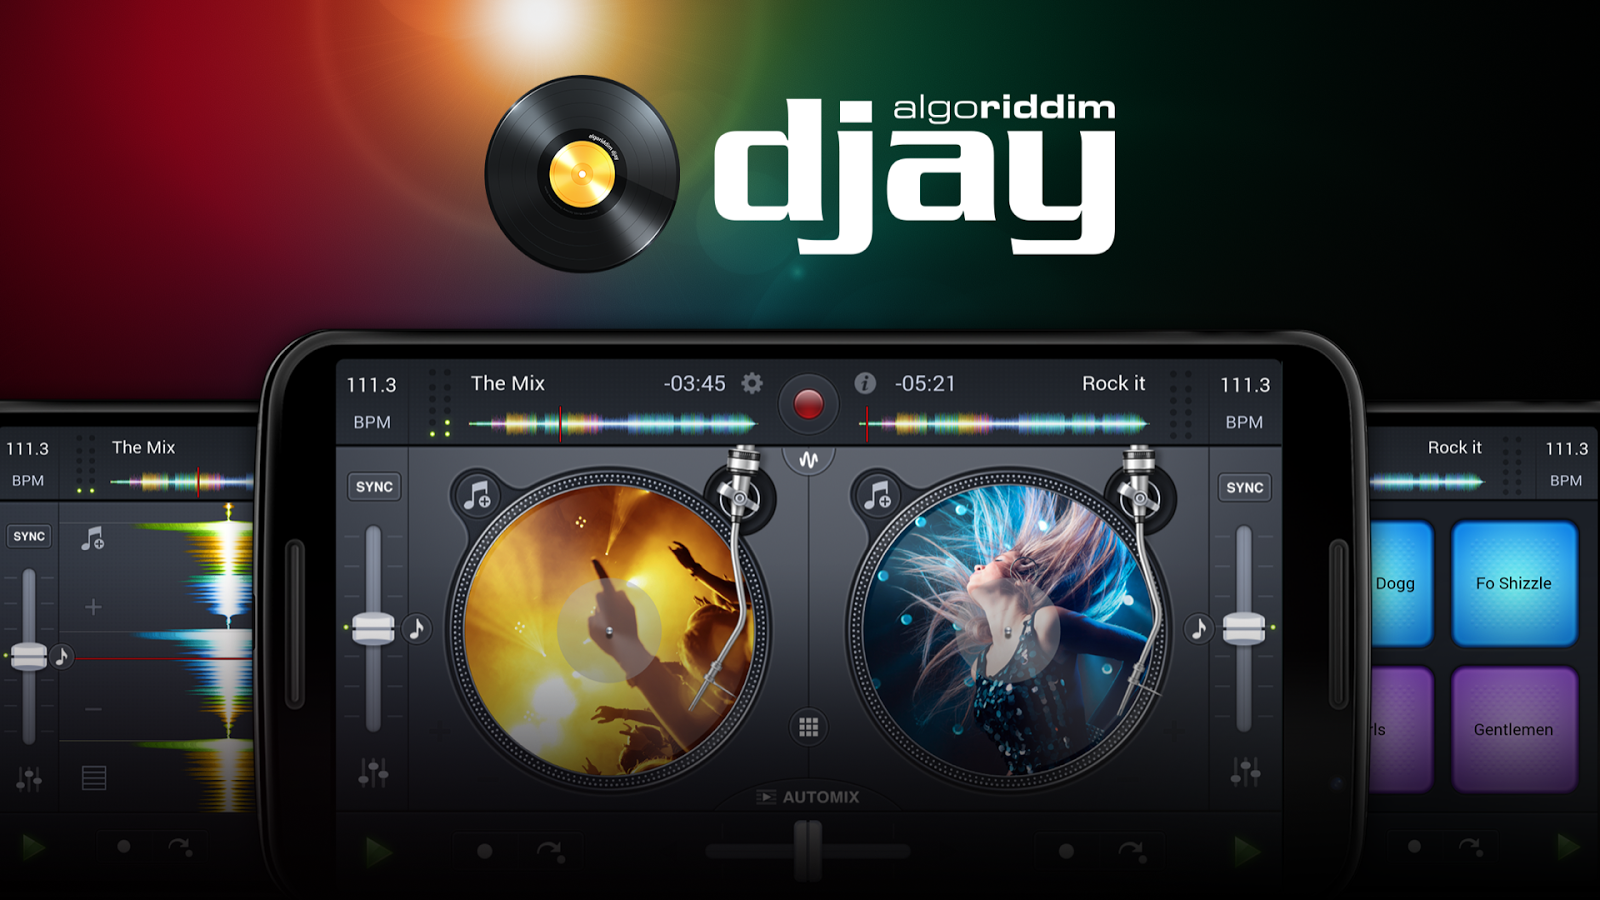 Review en español djay 2 de Algoriddim para tablet Android